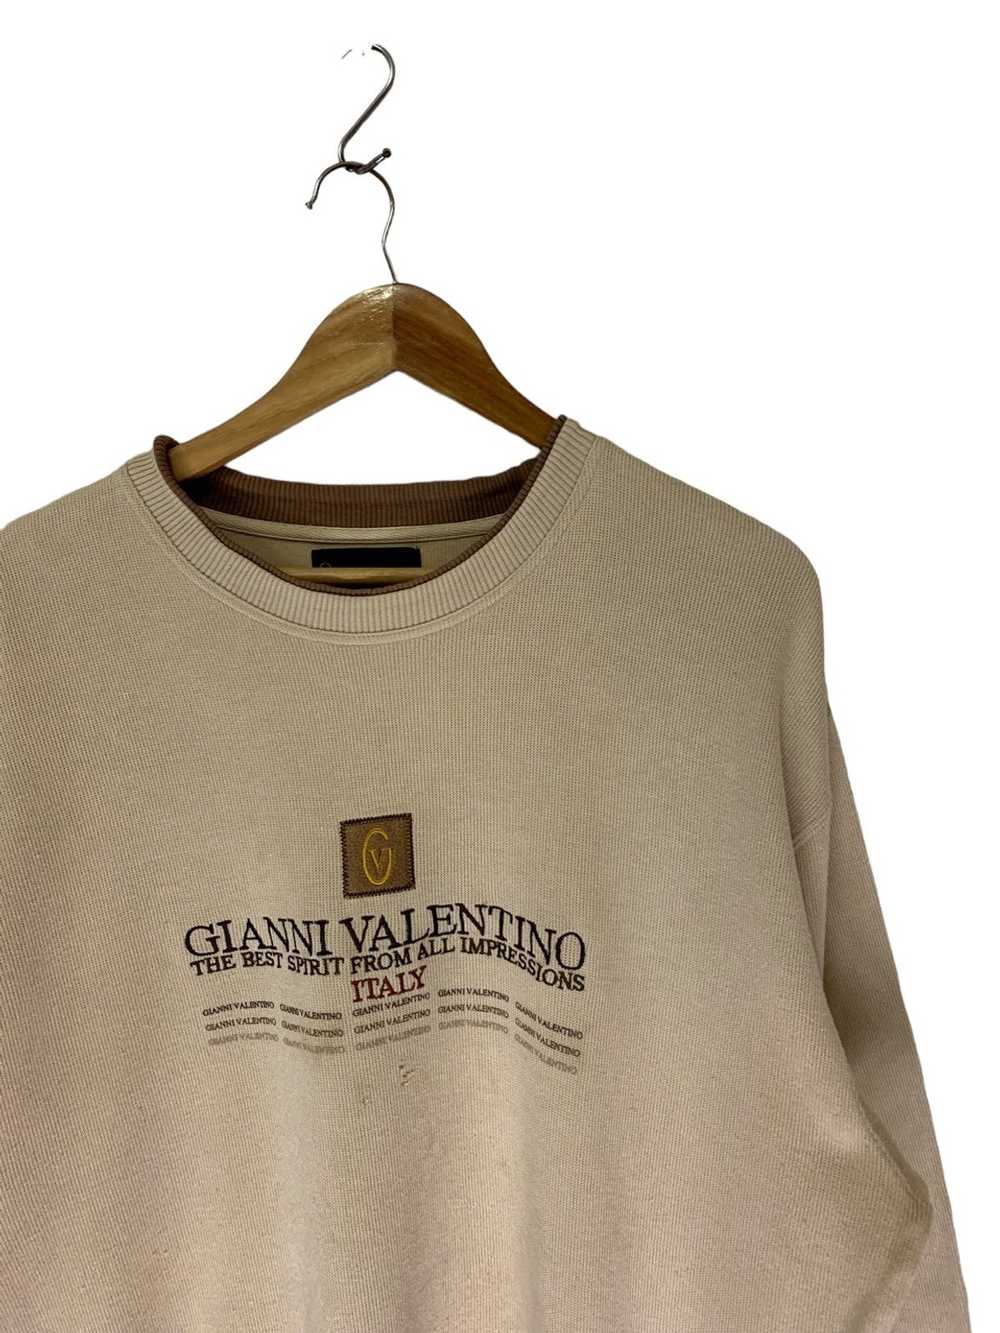 Gianni × Valentino Gianni Valentino Sweatshirt - image 2